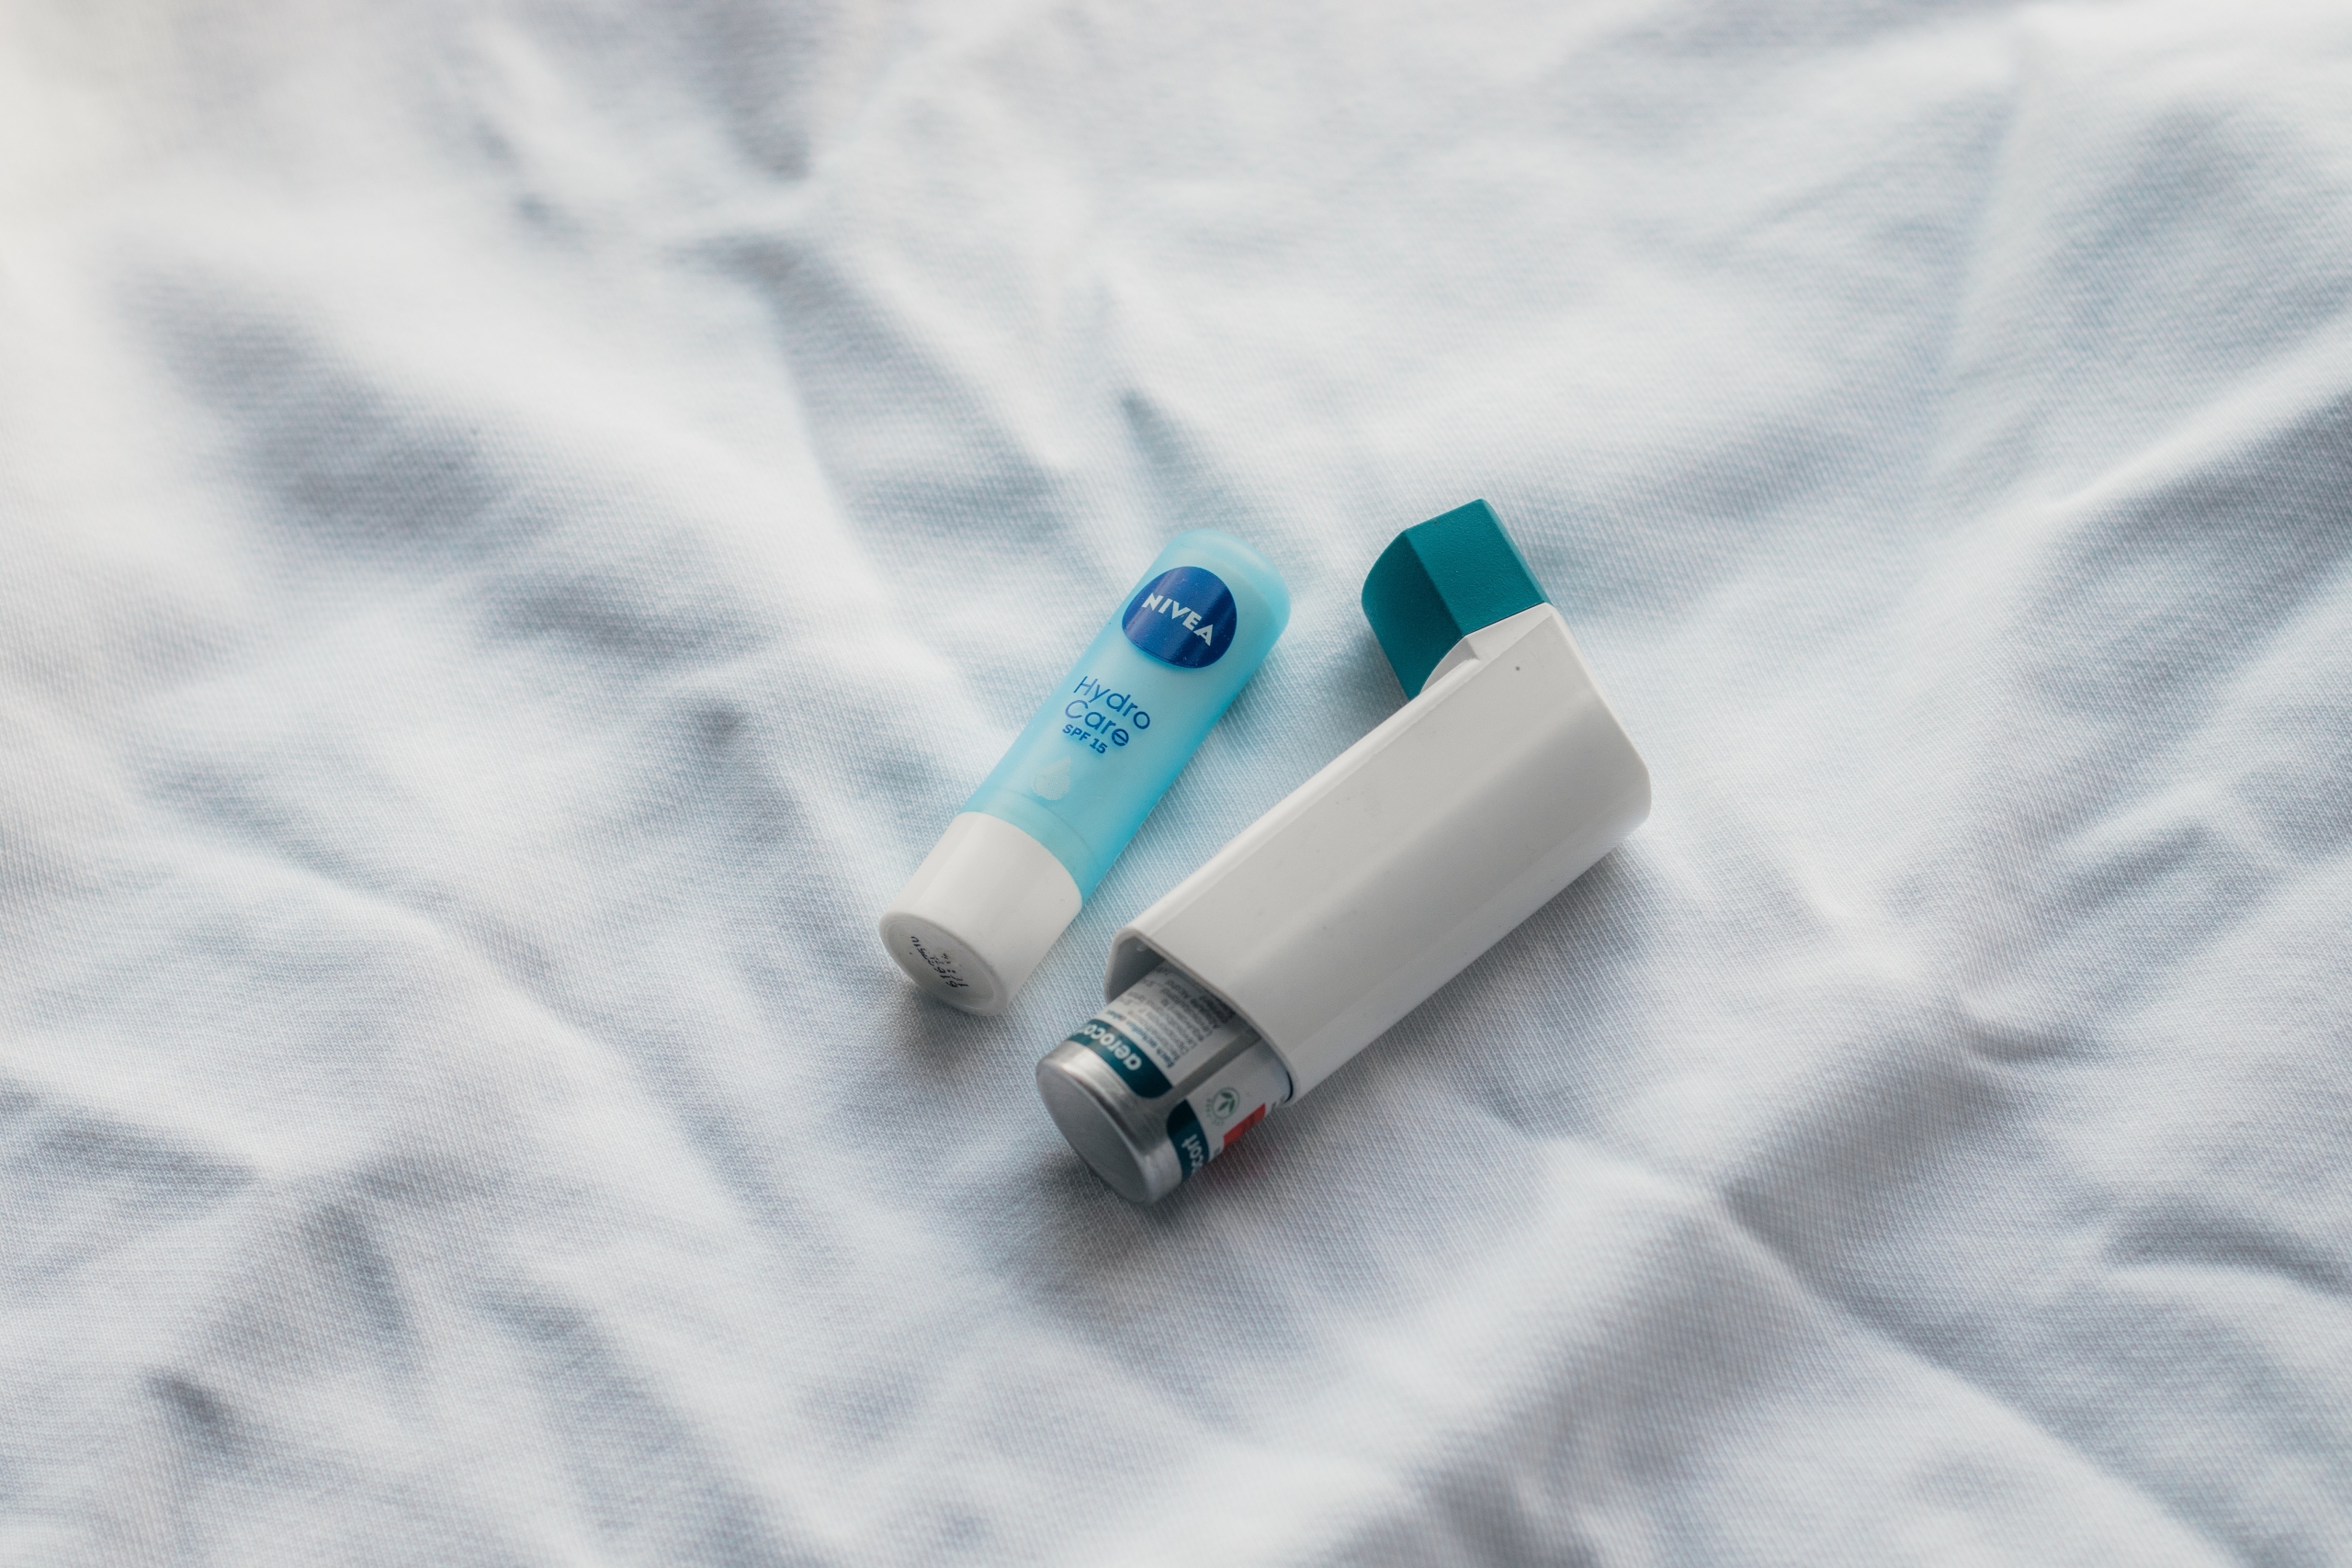 Chapstick next to inhaler